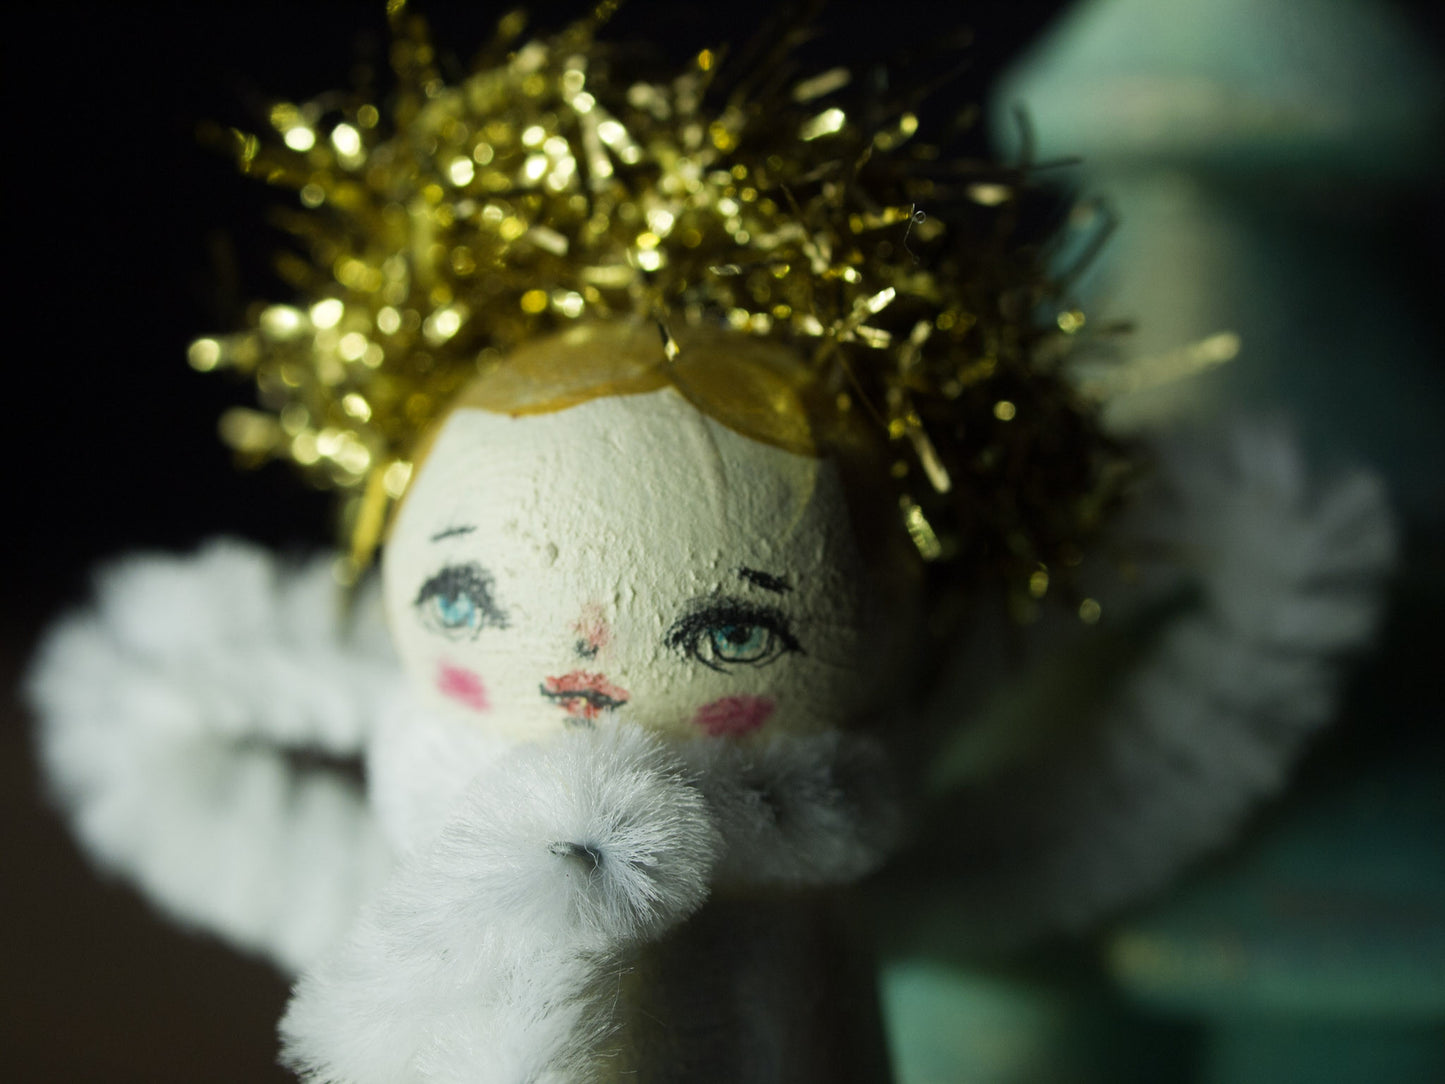 The angel of creativity, a holiday wood kokeshi art doll created by Danita Art